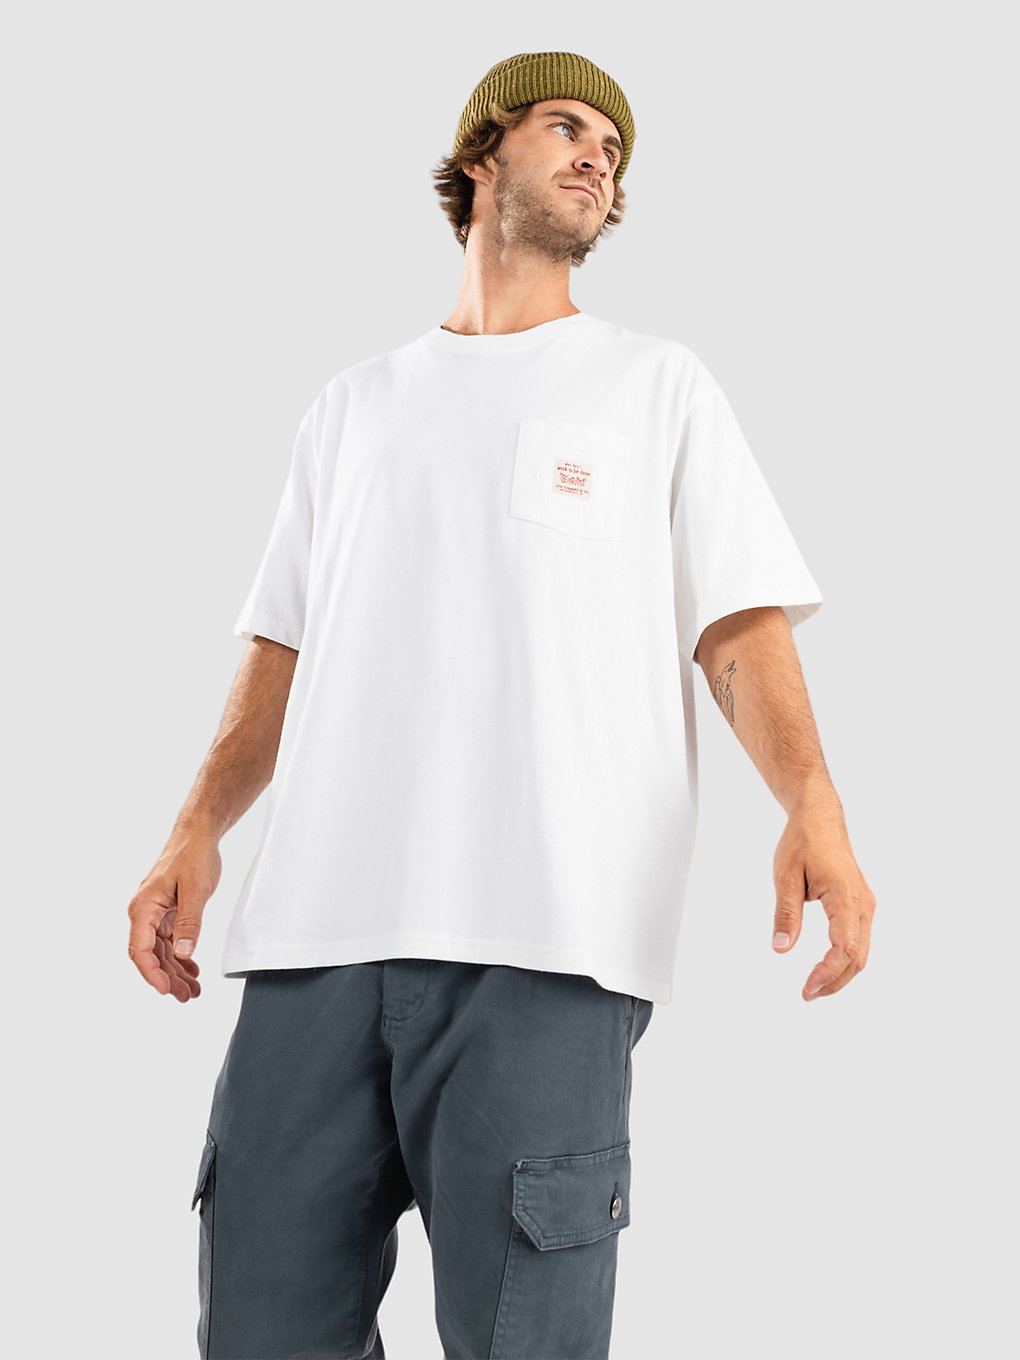 Levi's Workwear T-Shirt bright white kaufen